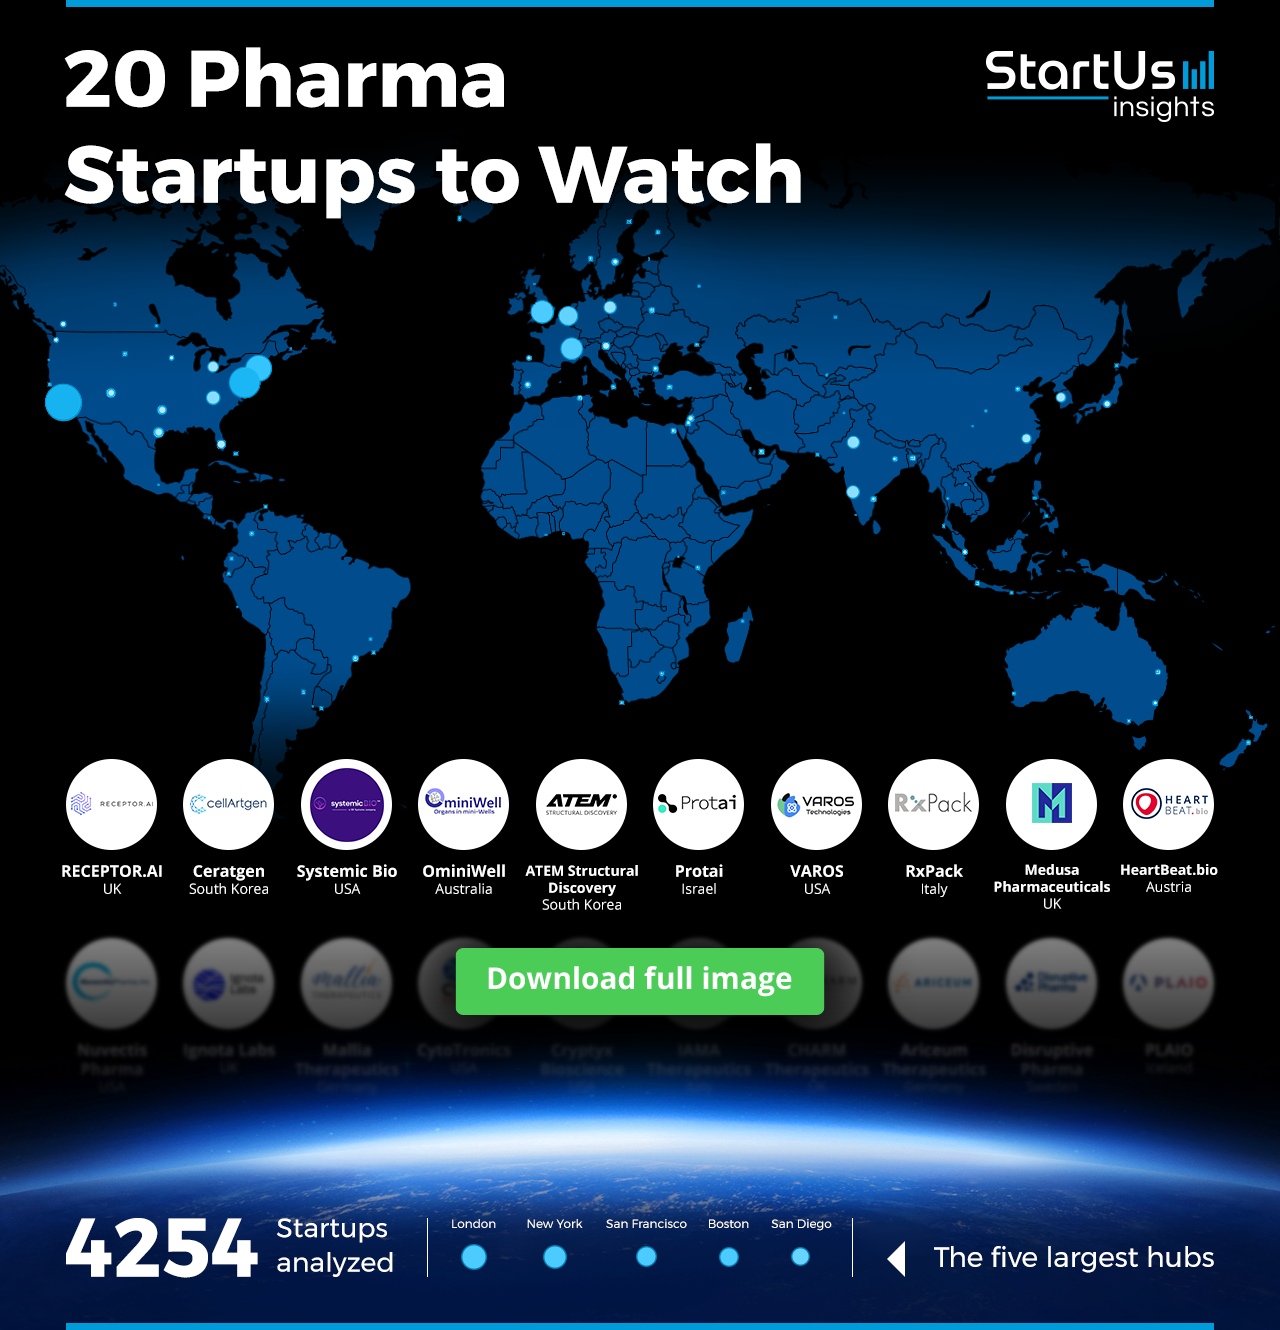 Pharma-Startups-to-Watch-Heat-Map-Blurred-StartUs-Insights-noresize